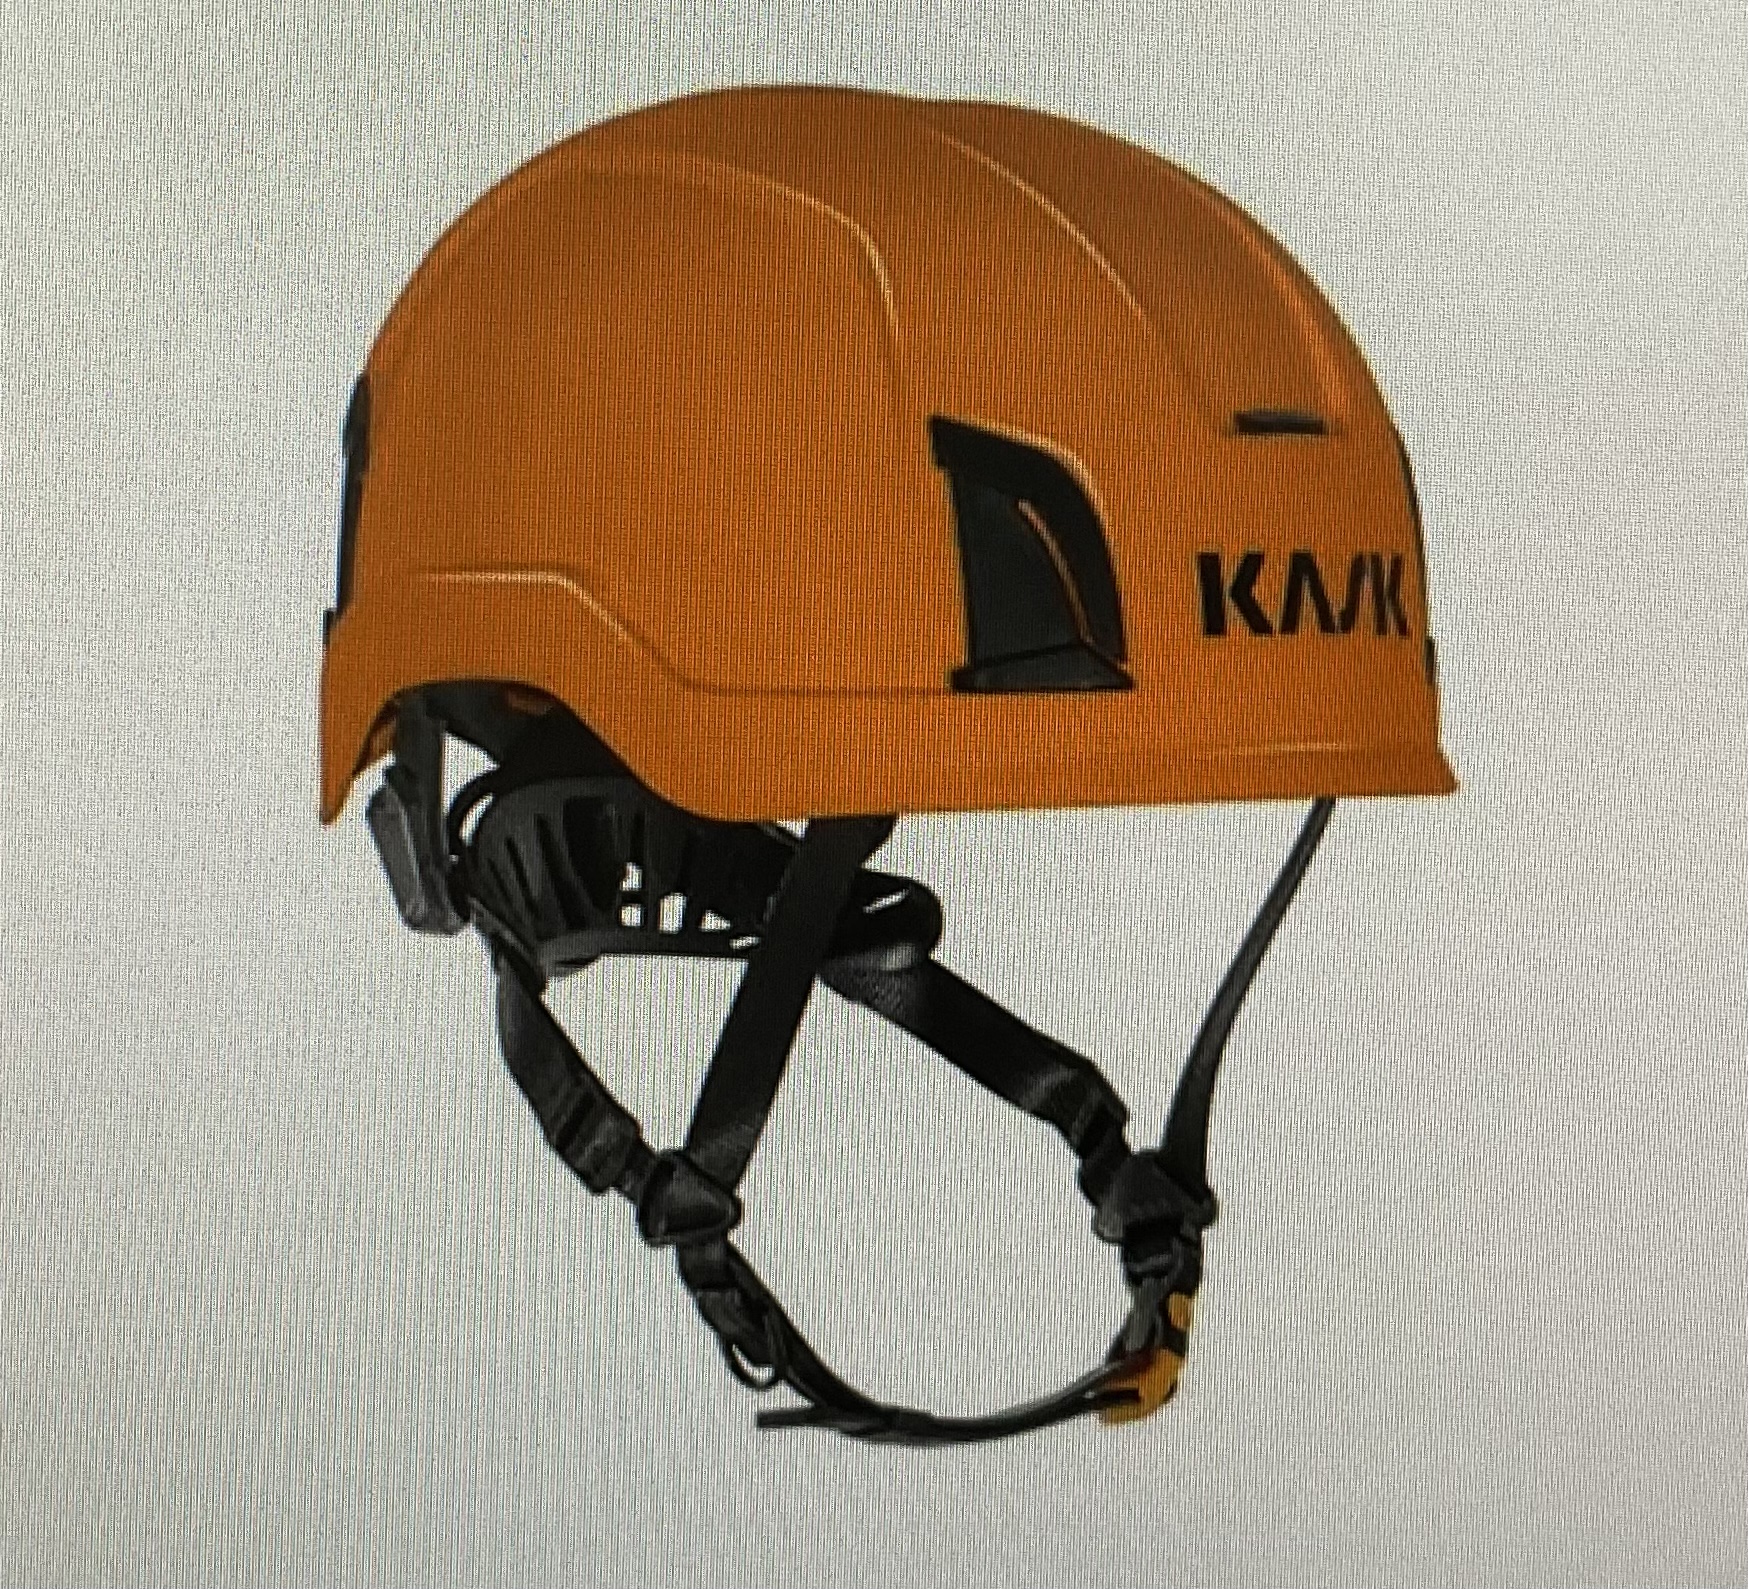 New Helmet Distribution